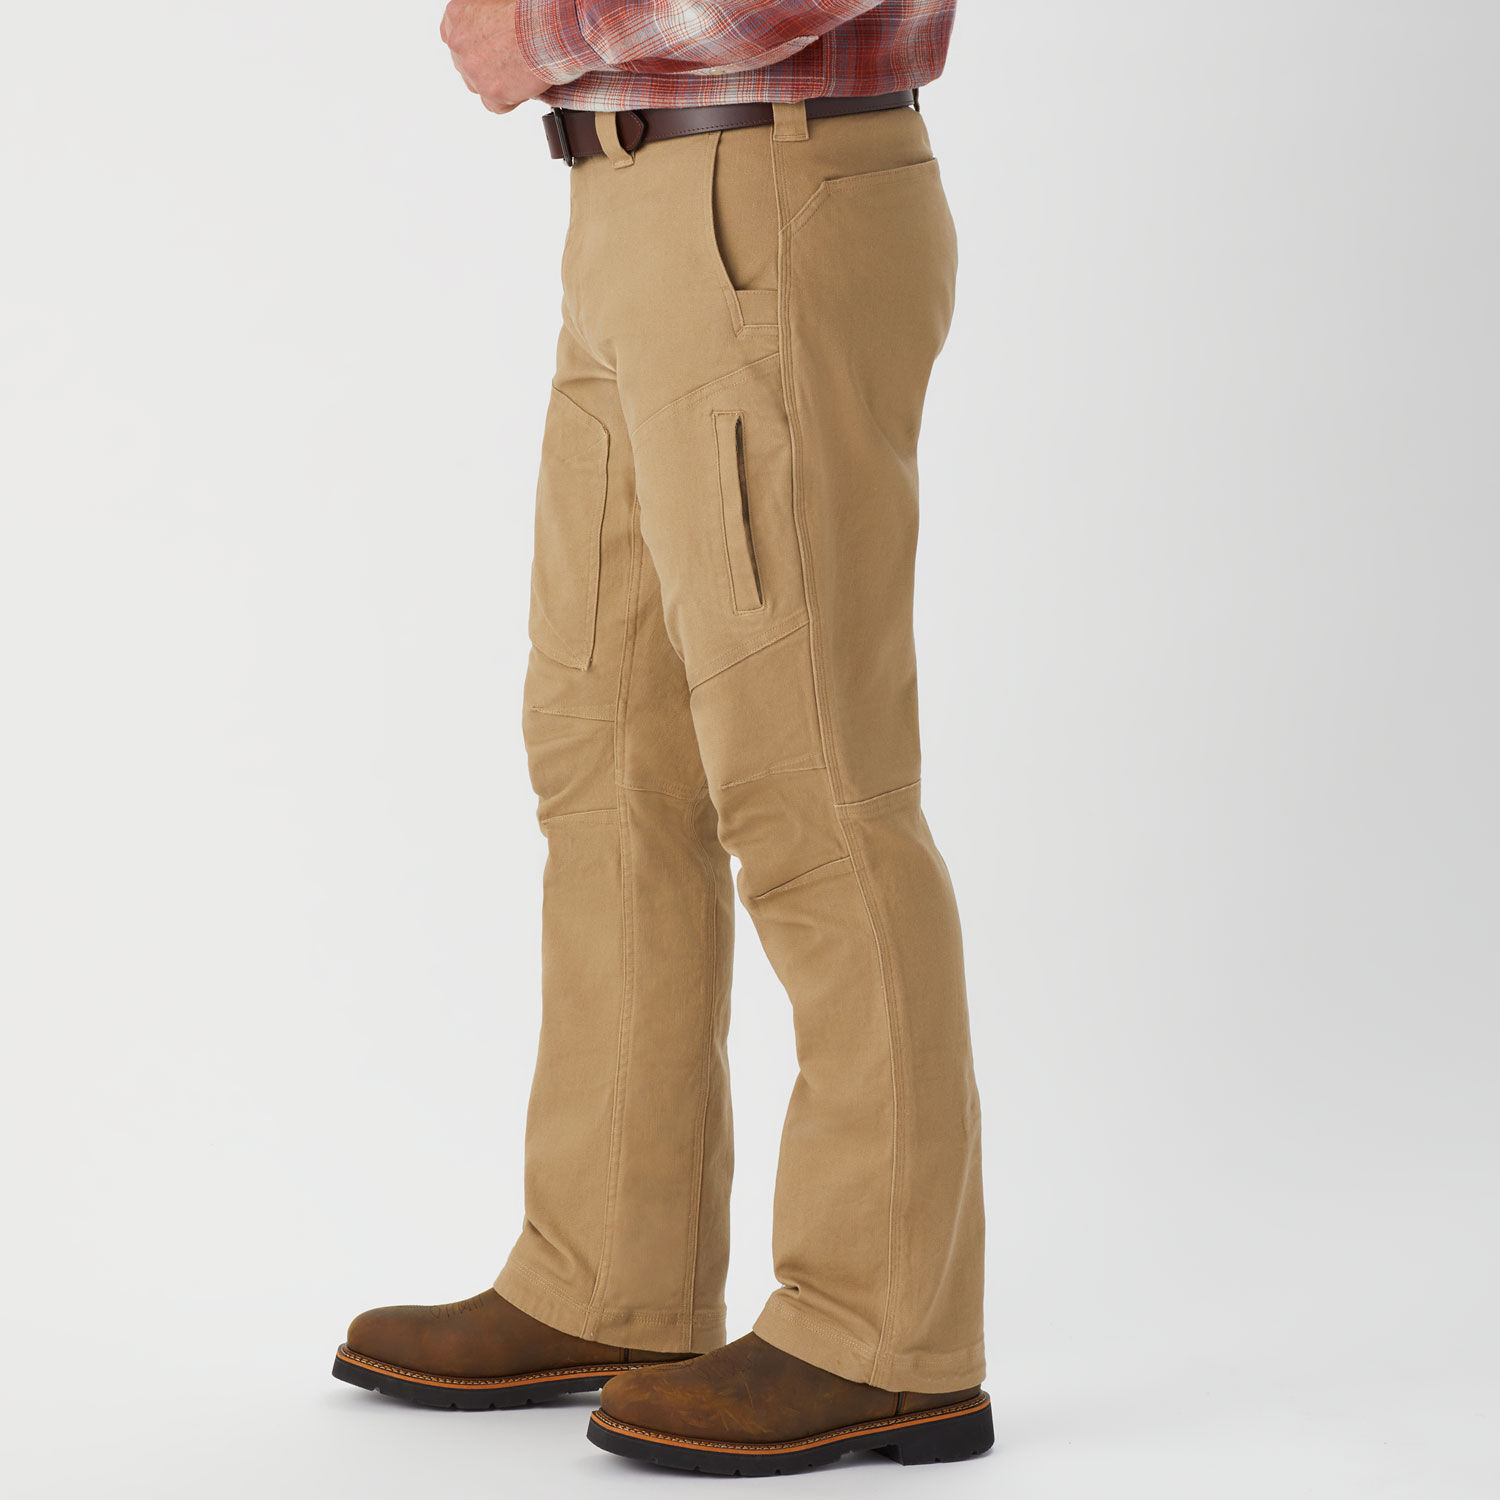 Buy Men's Kyubic Brown Cargo Pant Online | SNITCH